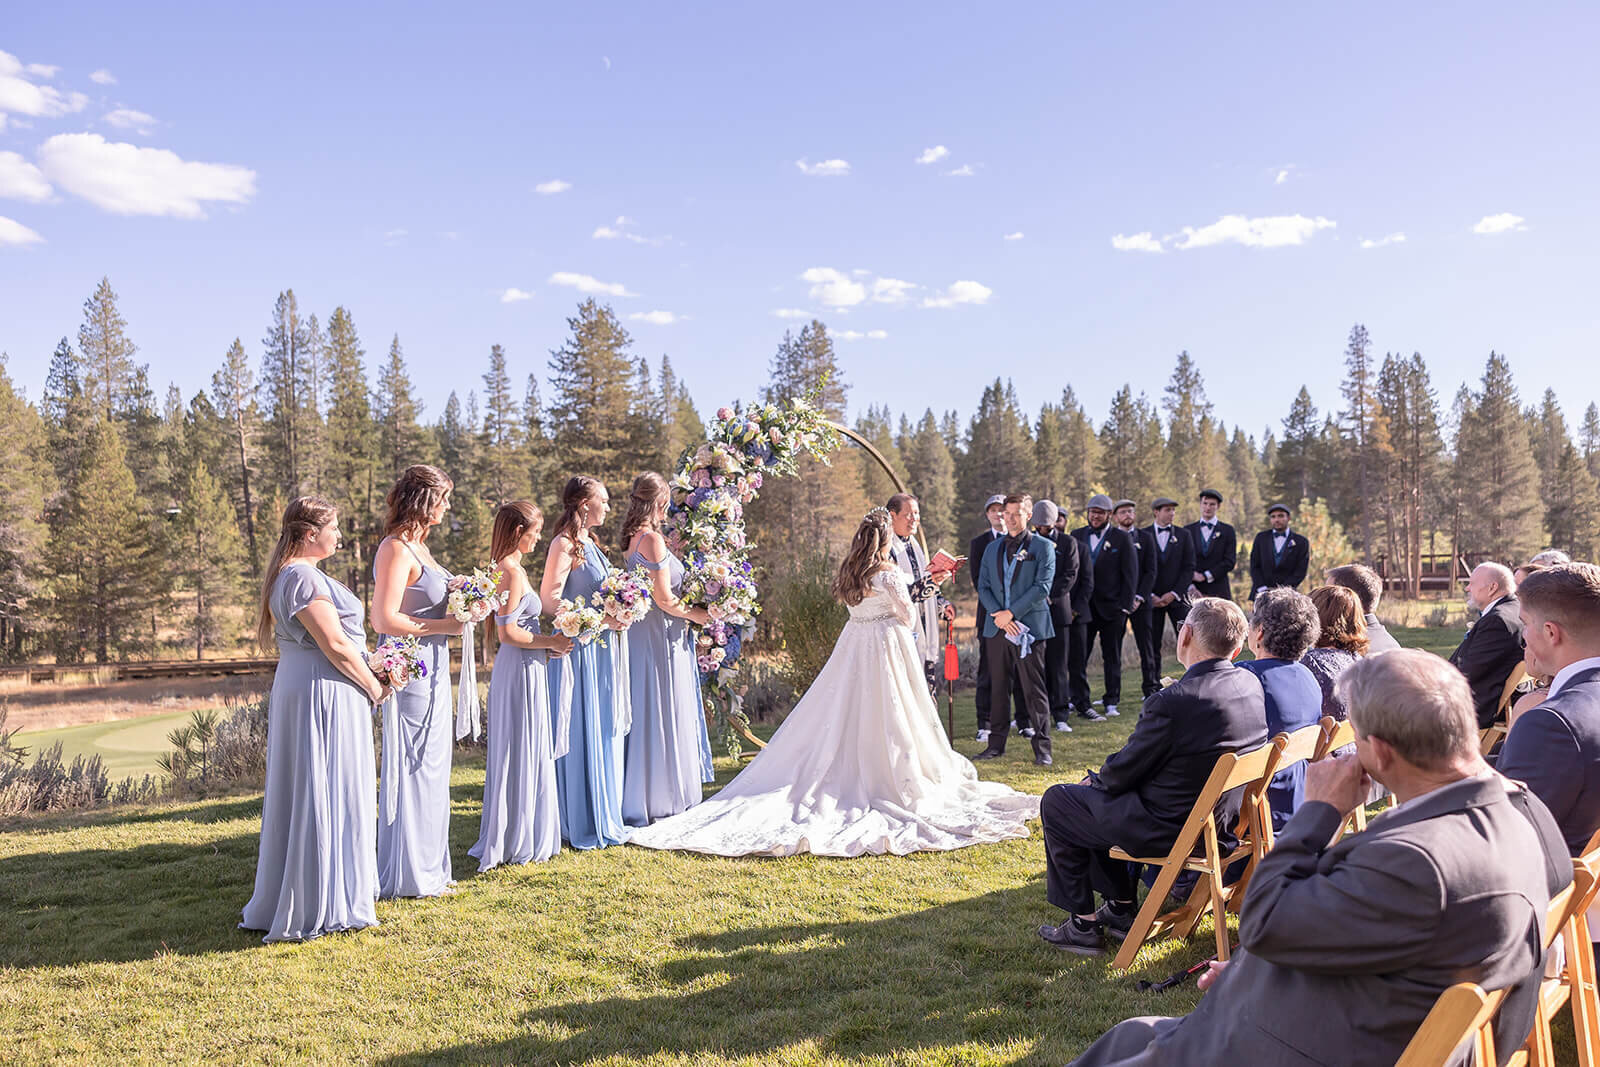 PJ's Crossing Wedding - Lake Tahoe - Destination Wedding Florist - Autumn Marcelle Design x LXN Photography (45)